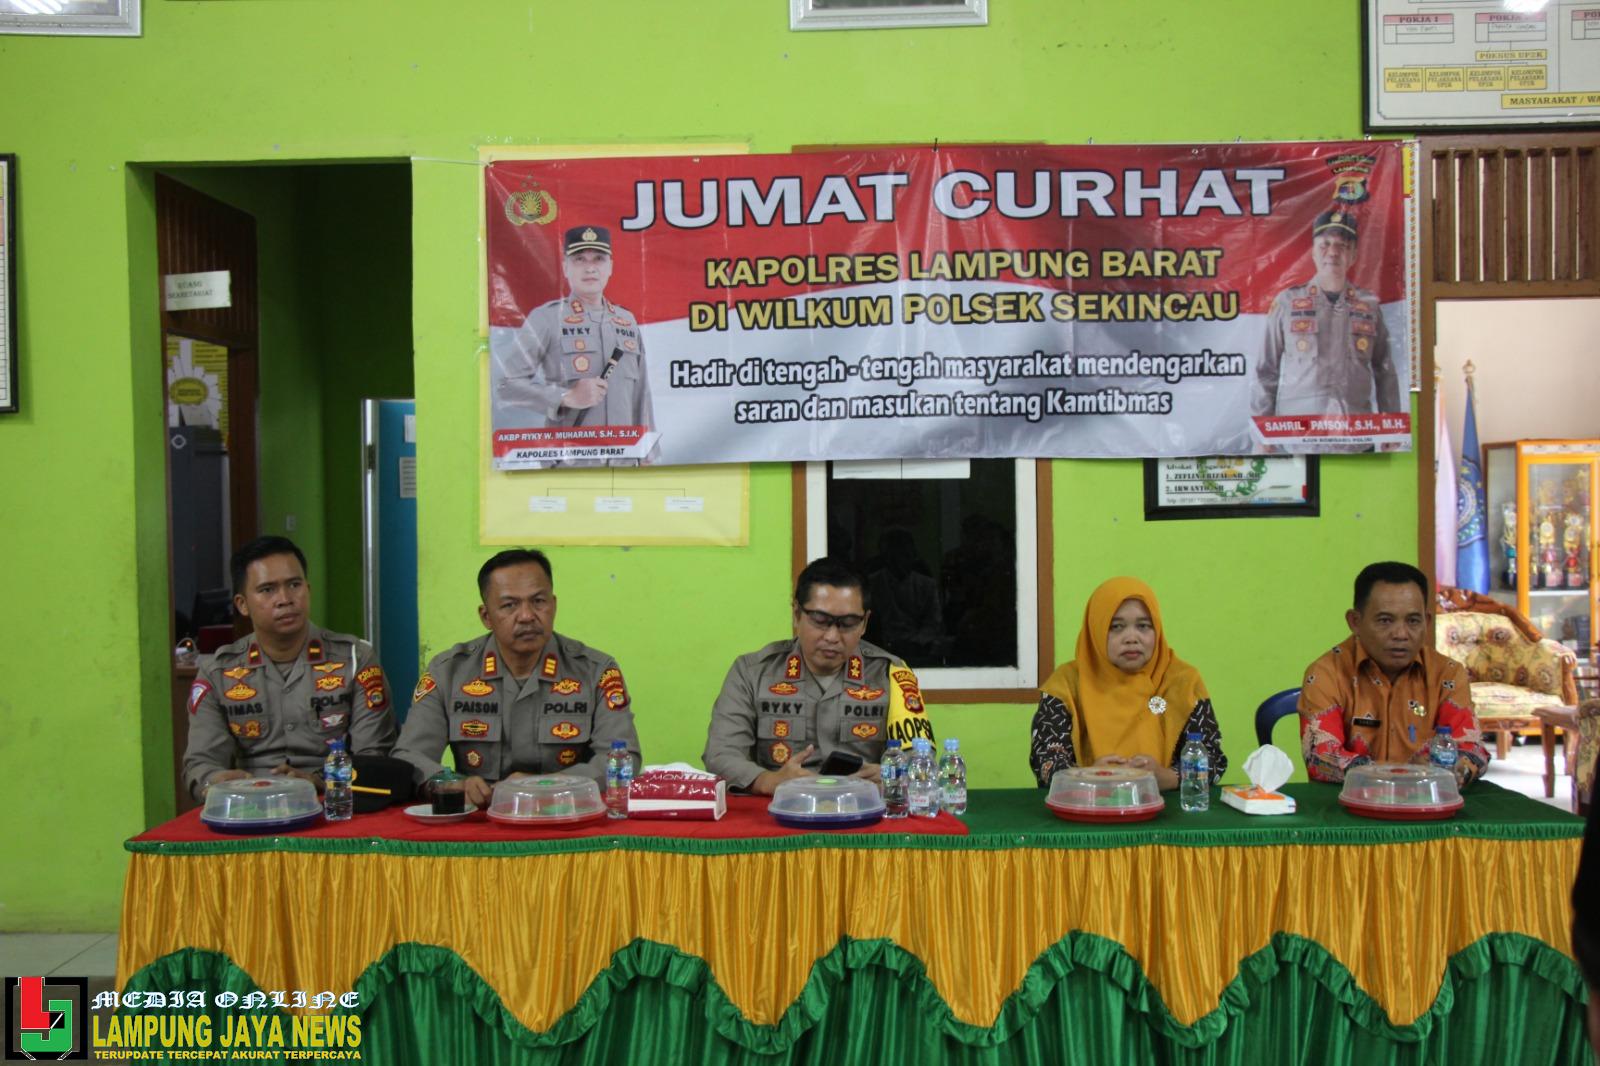 Kapolres Lampung Barat Gelar Jumat Curhat di Balai Pekon Kembahang